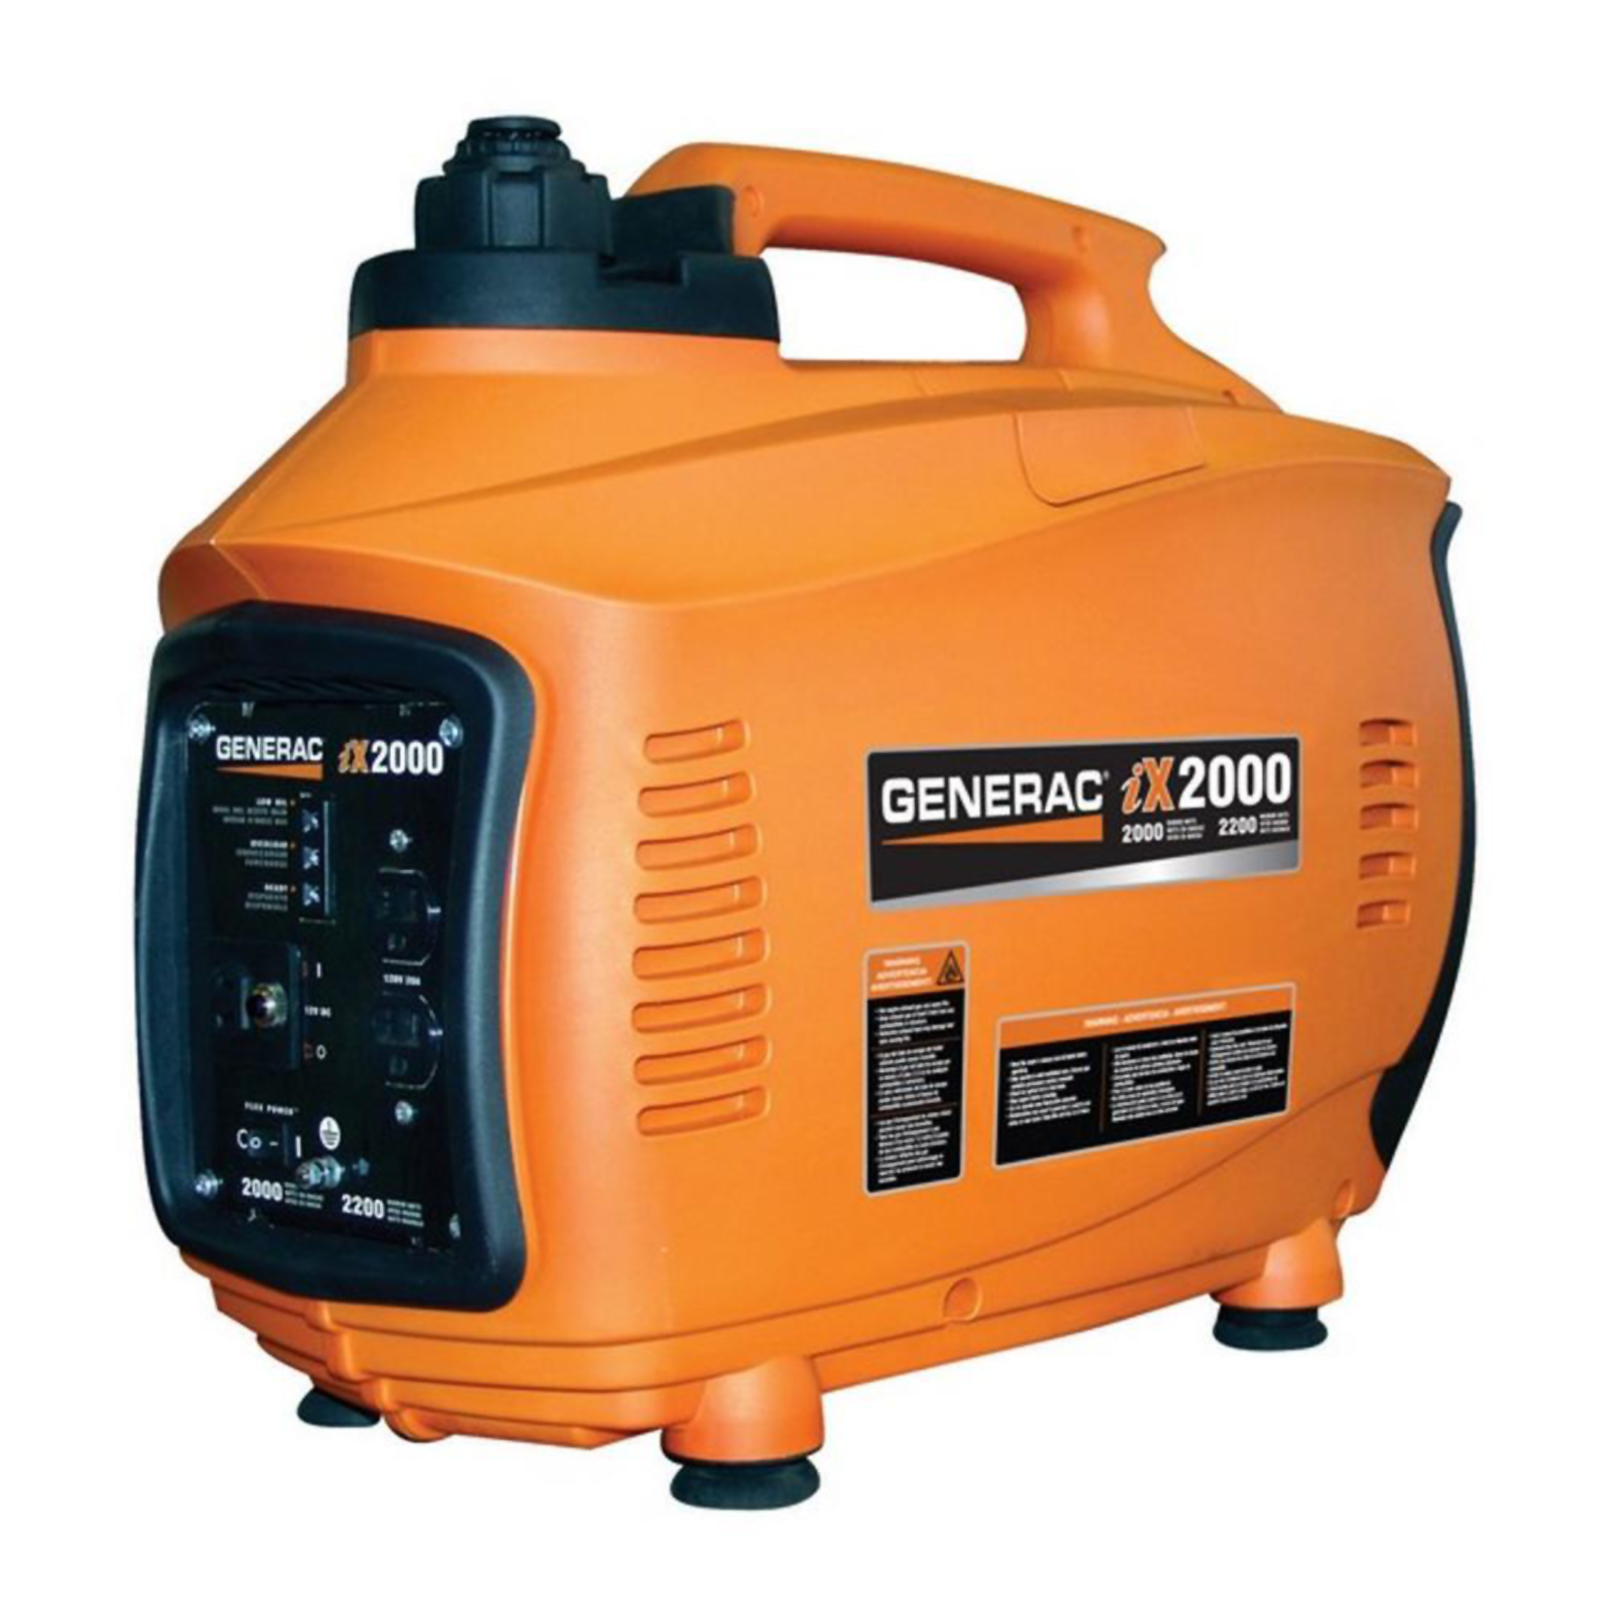 Generac 5793 iX Series 2000W Gas Portable Inverter Generator with LED Status Indicator Lights